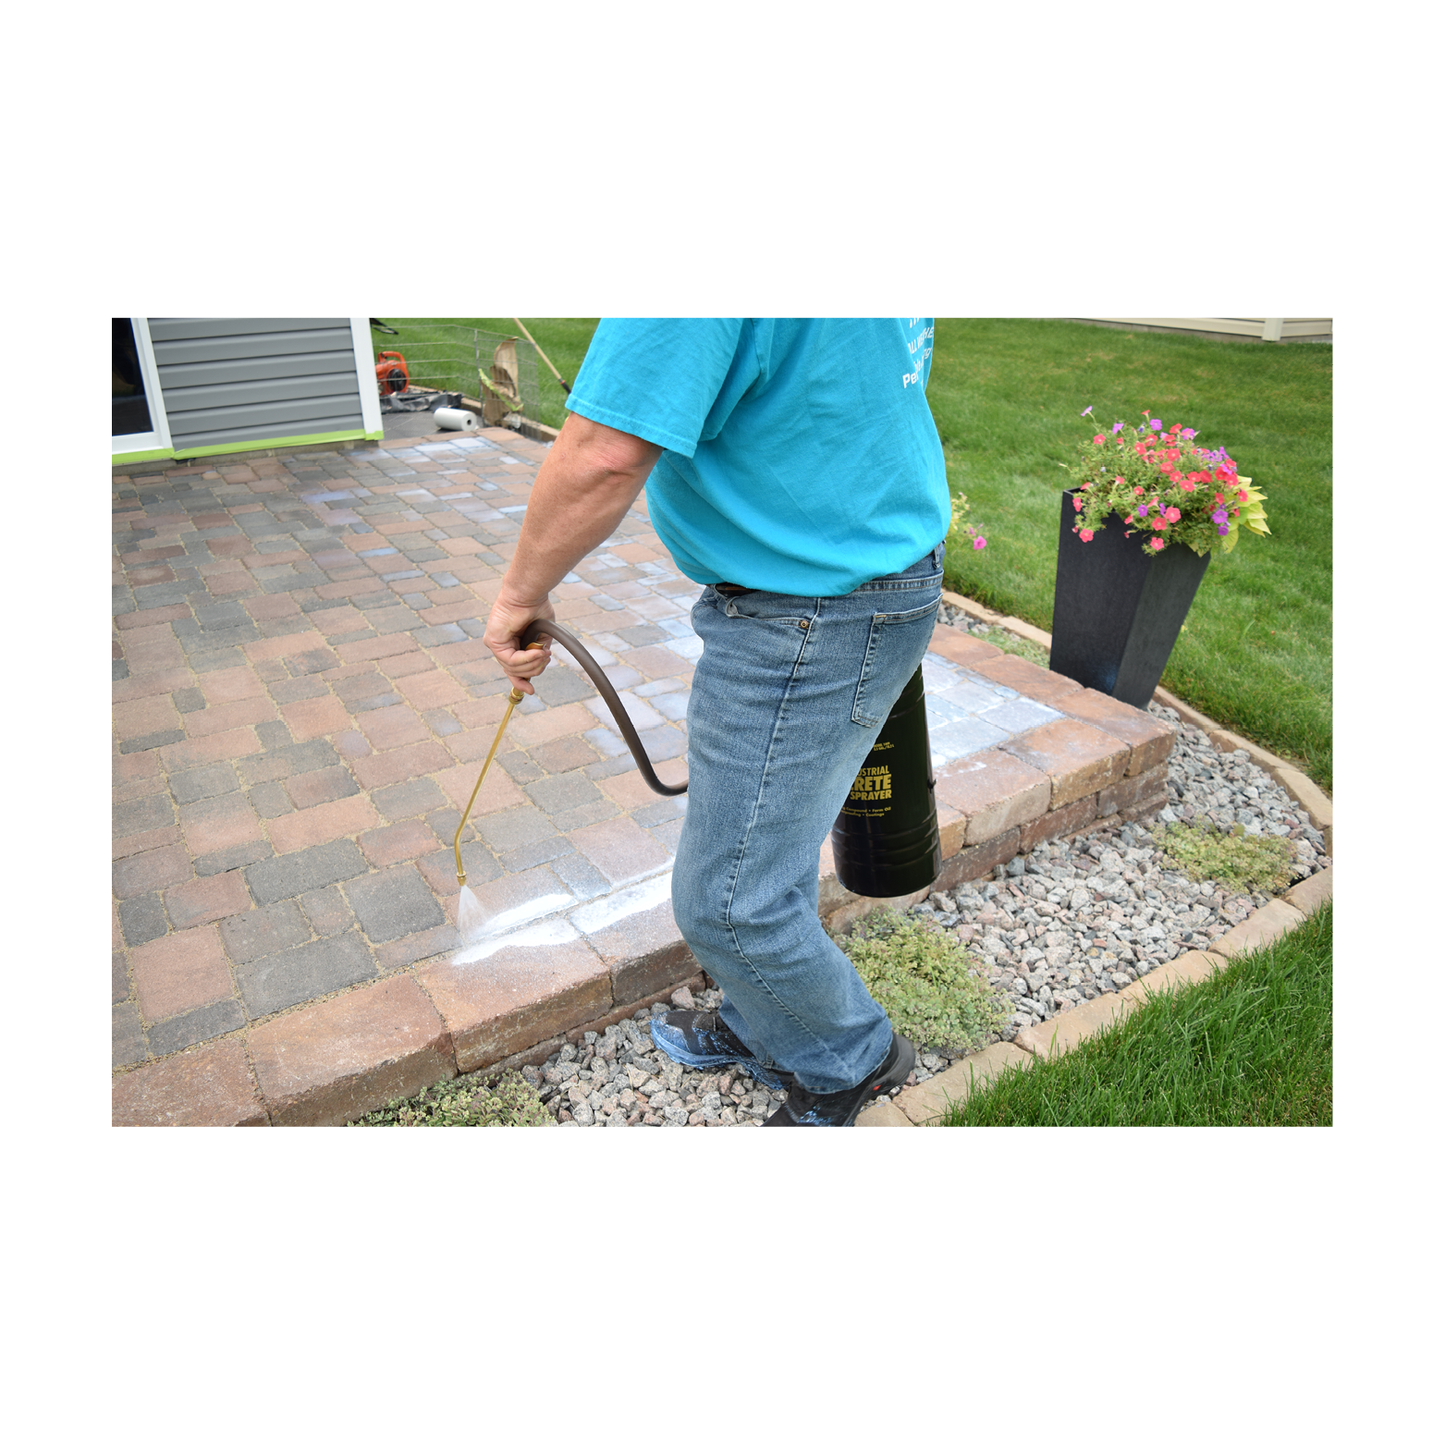 Spraying low gloss patio sealer with construction sprayer